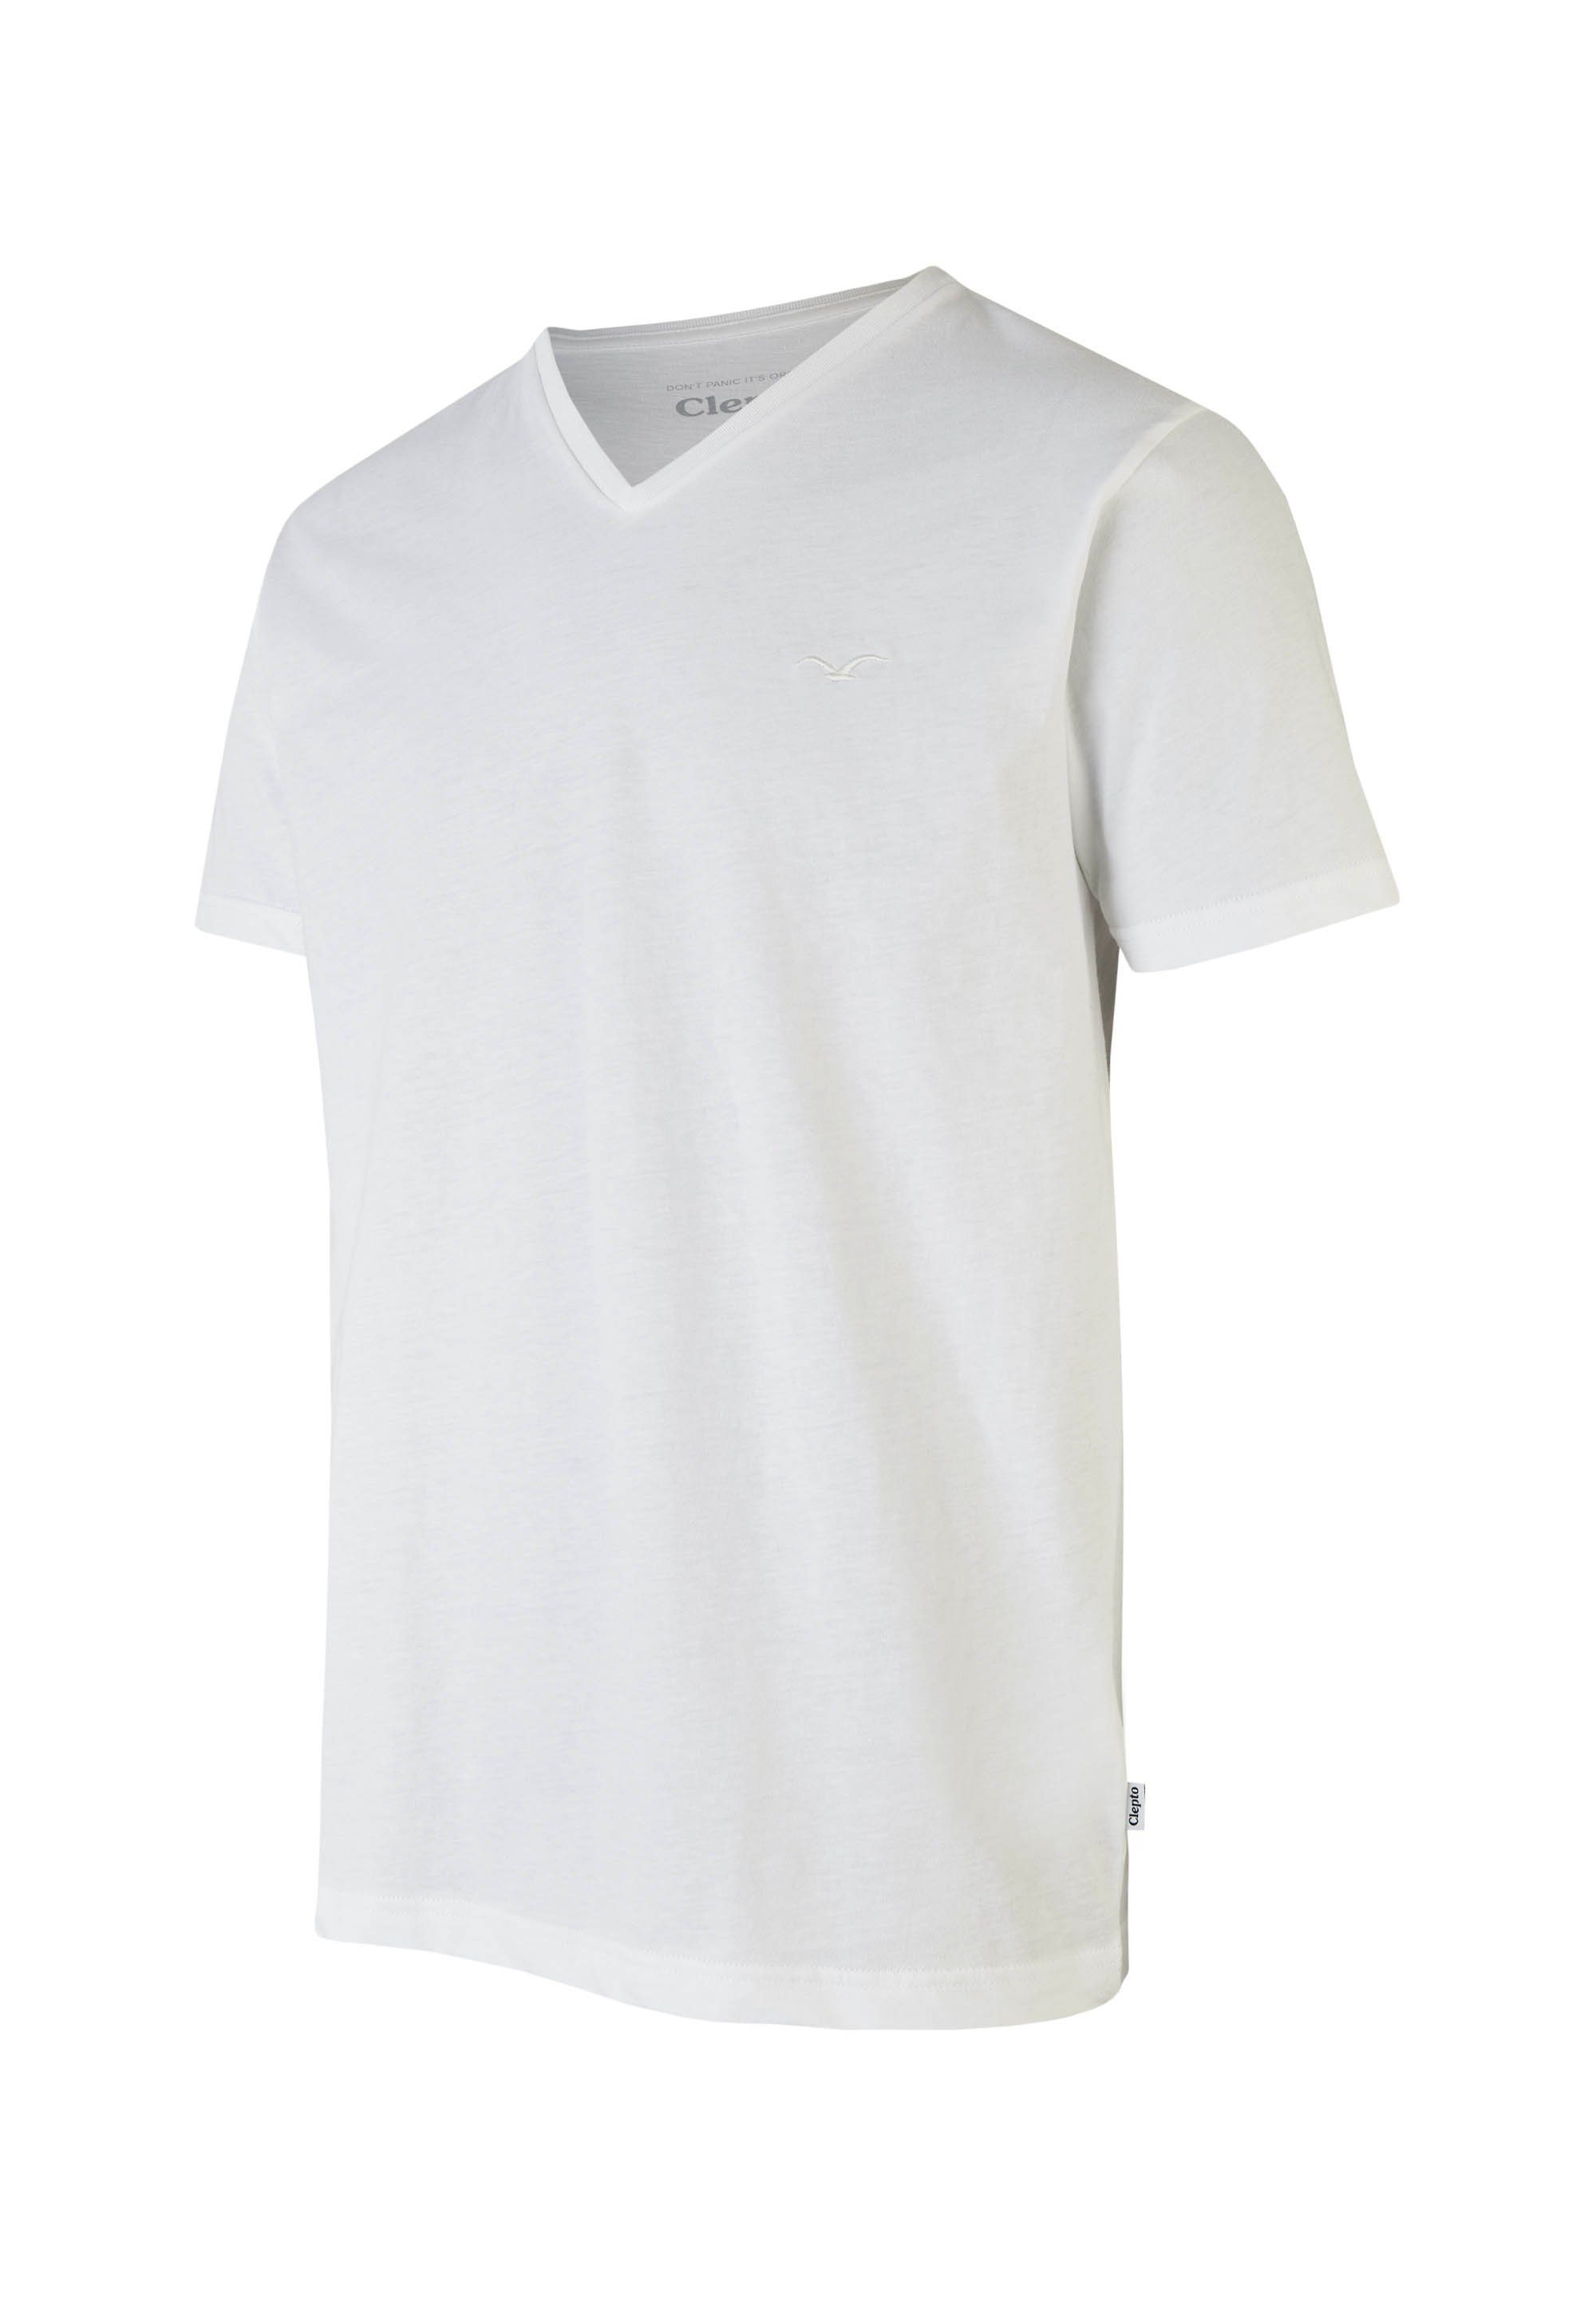 Schnitt Cleptomanicx T-Shirt mit Regular weiß V lockerem Ligull